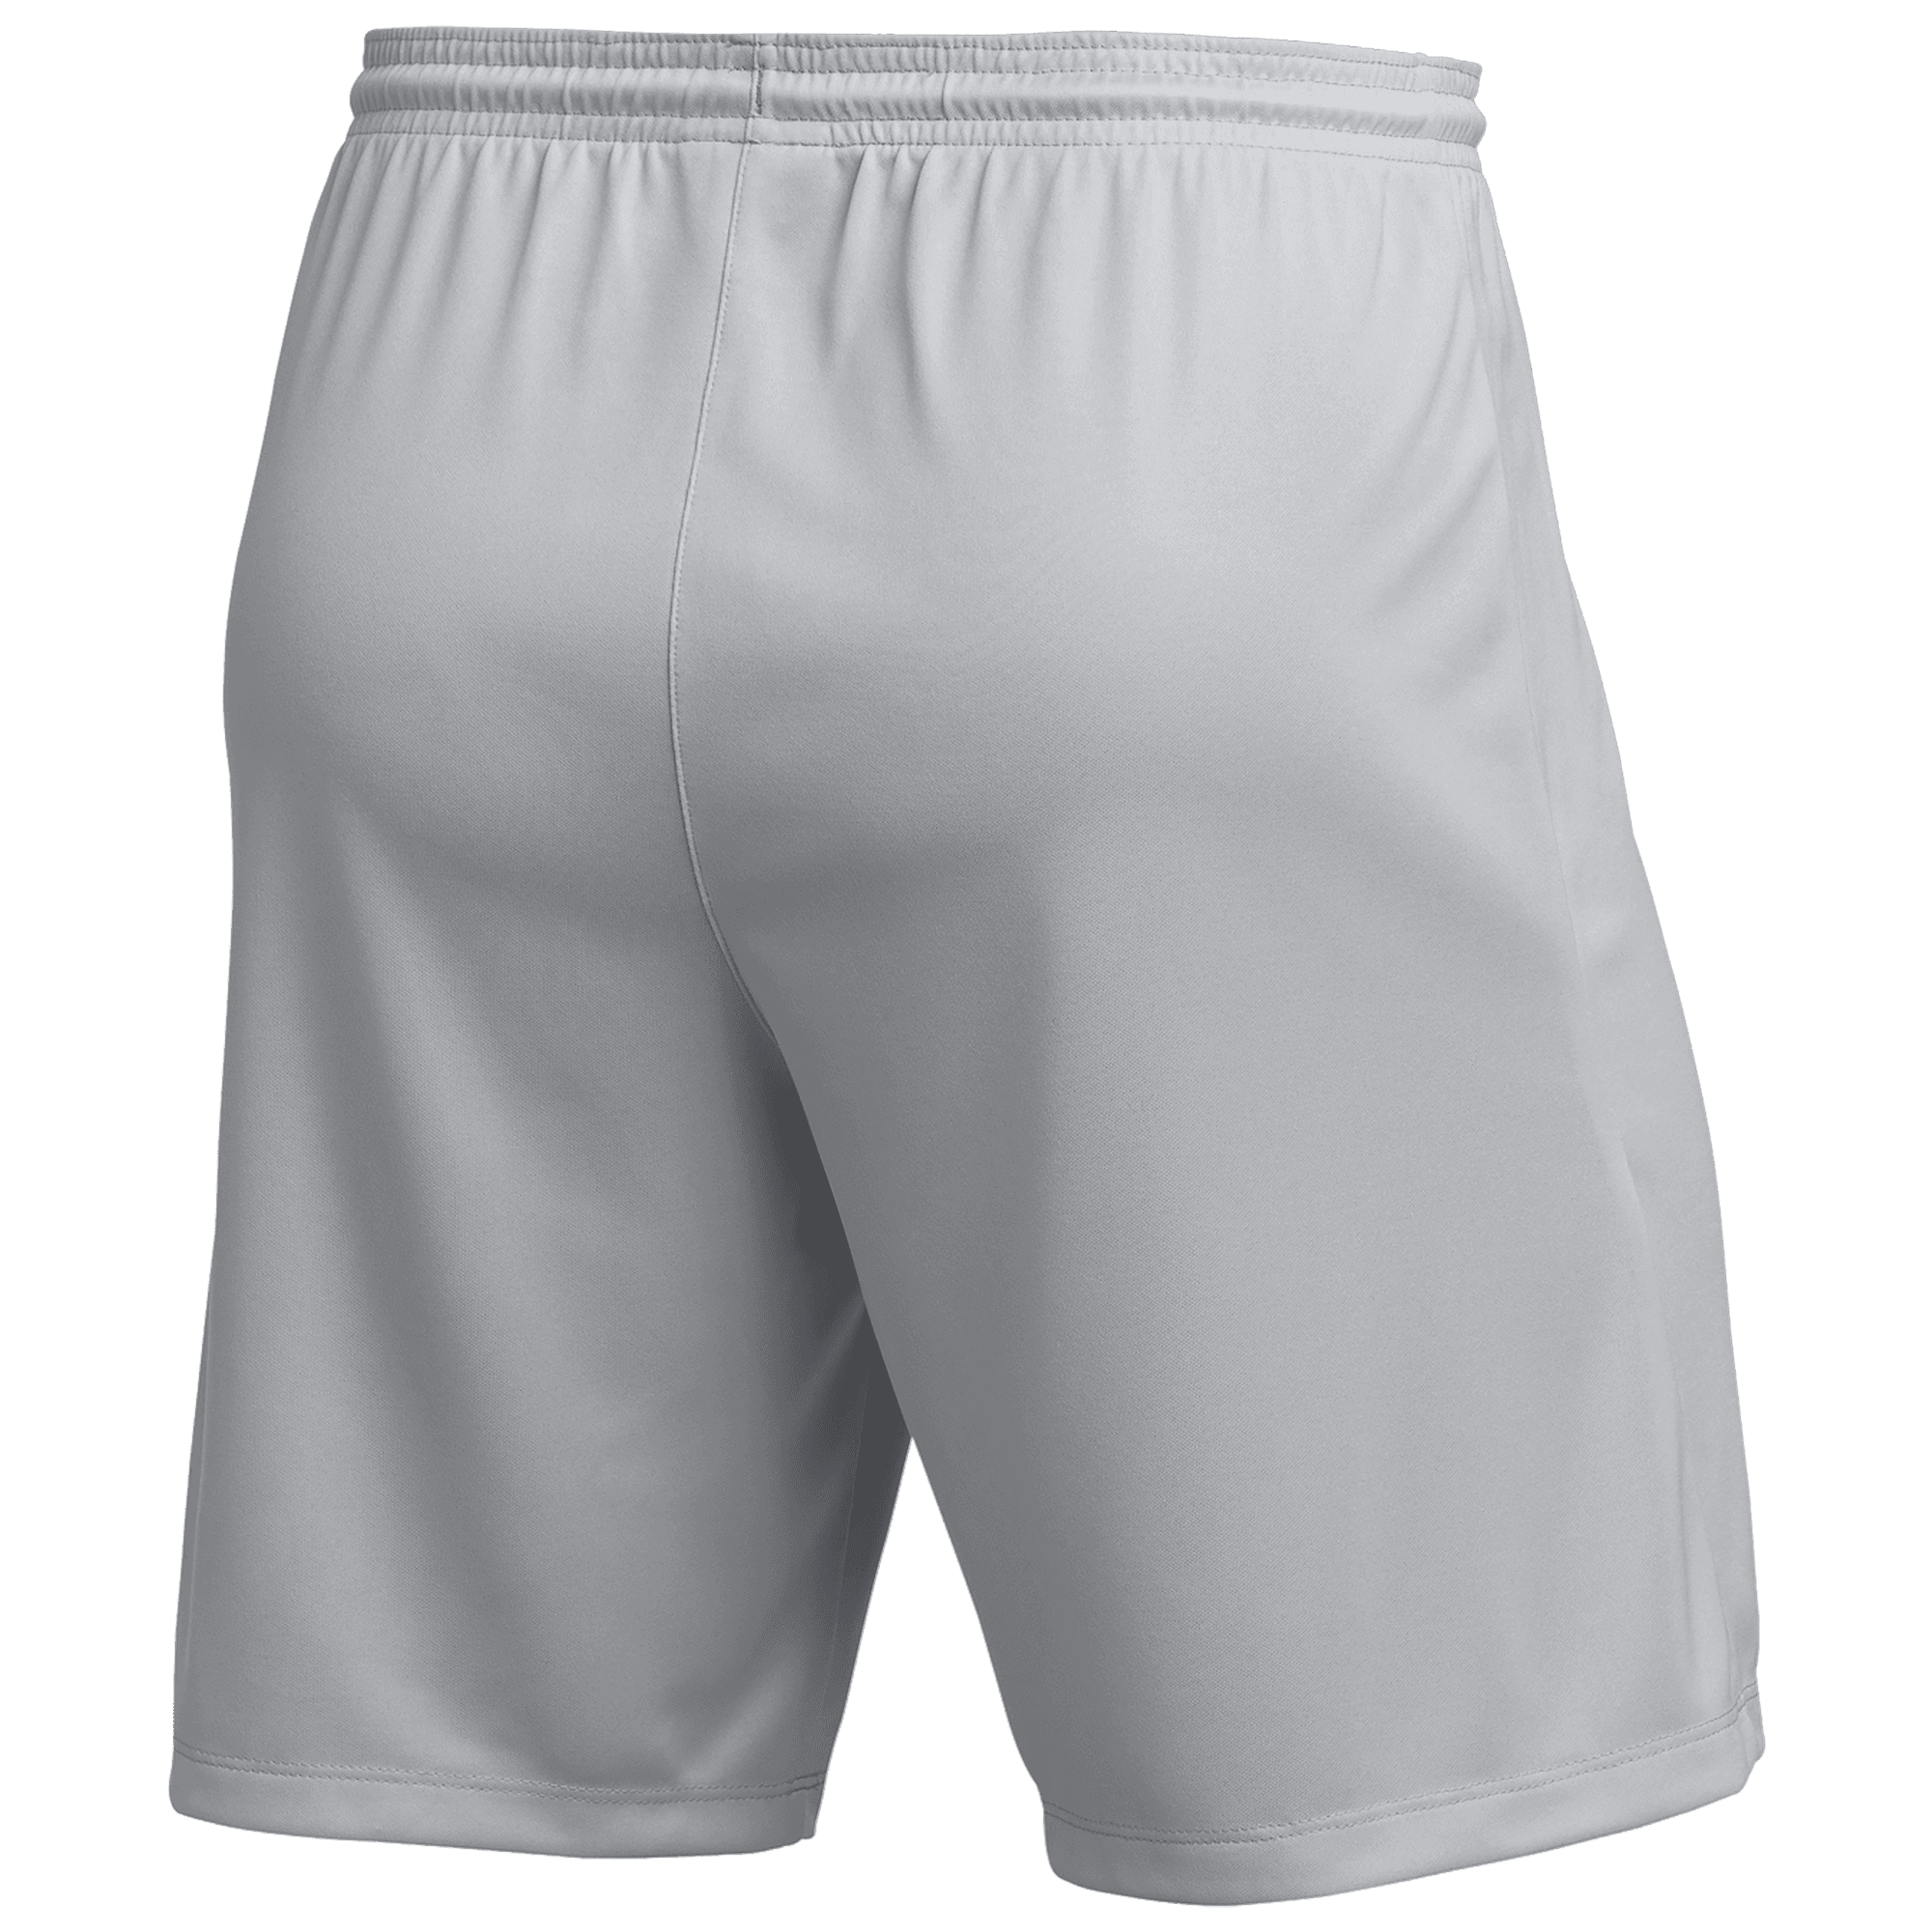 Gevoelig Winkelier landen stefanssoccer.com:Nike Park III Shorts - Grey